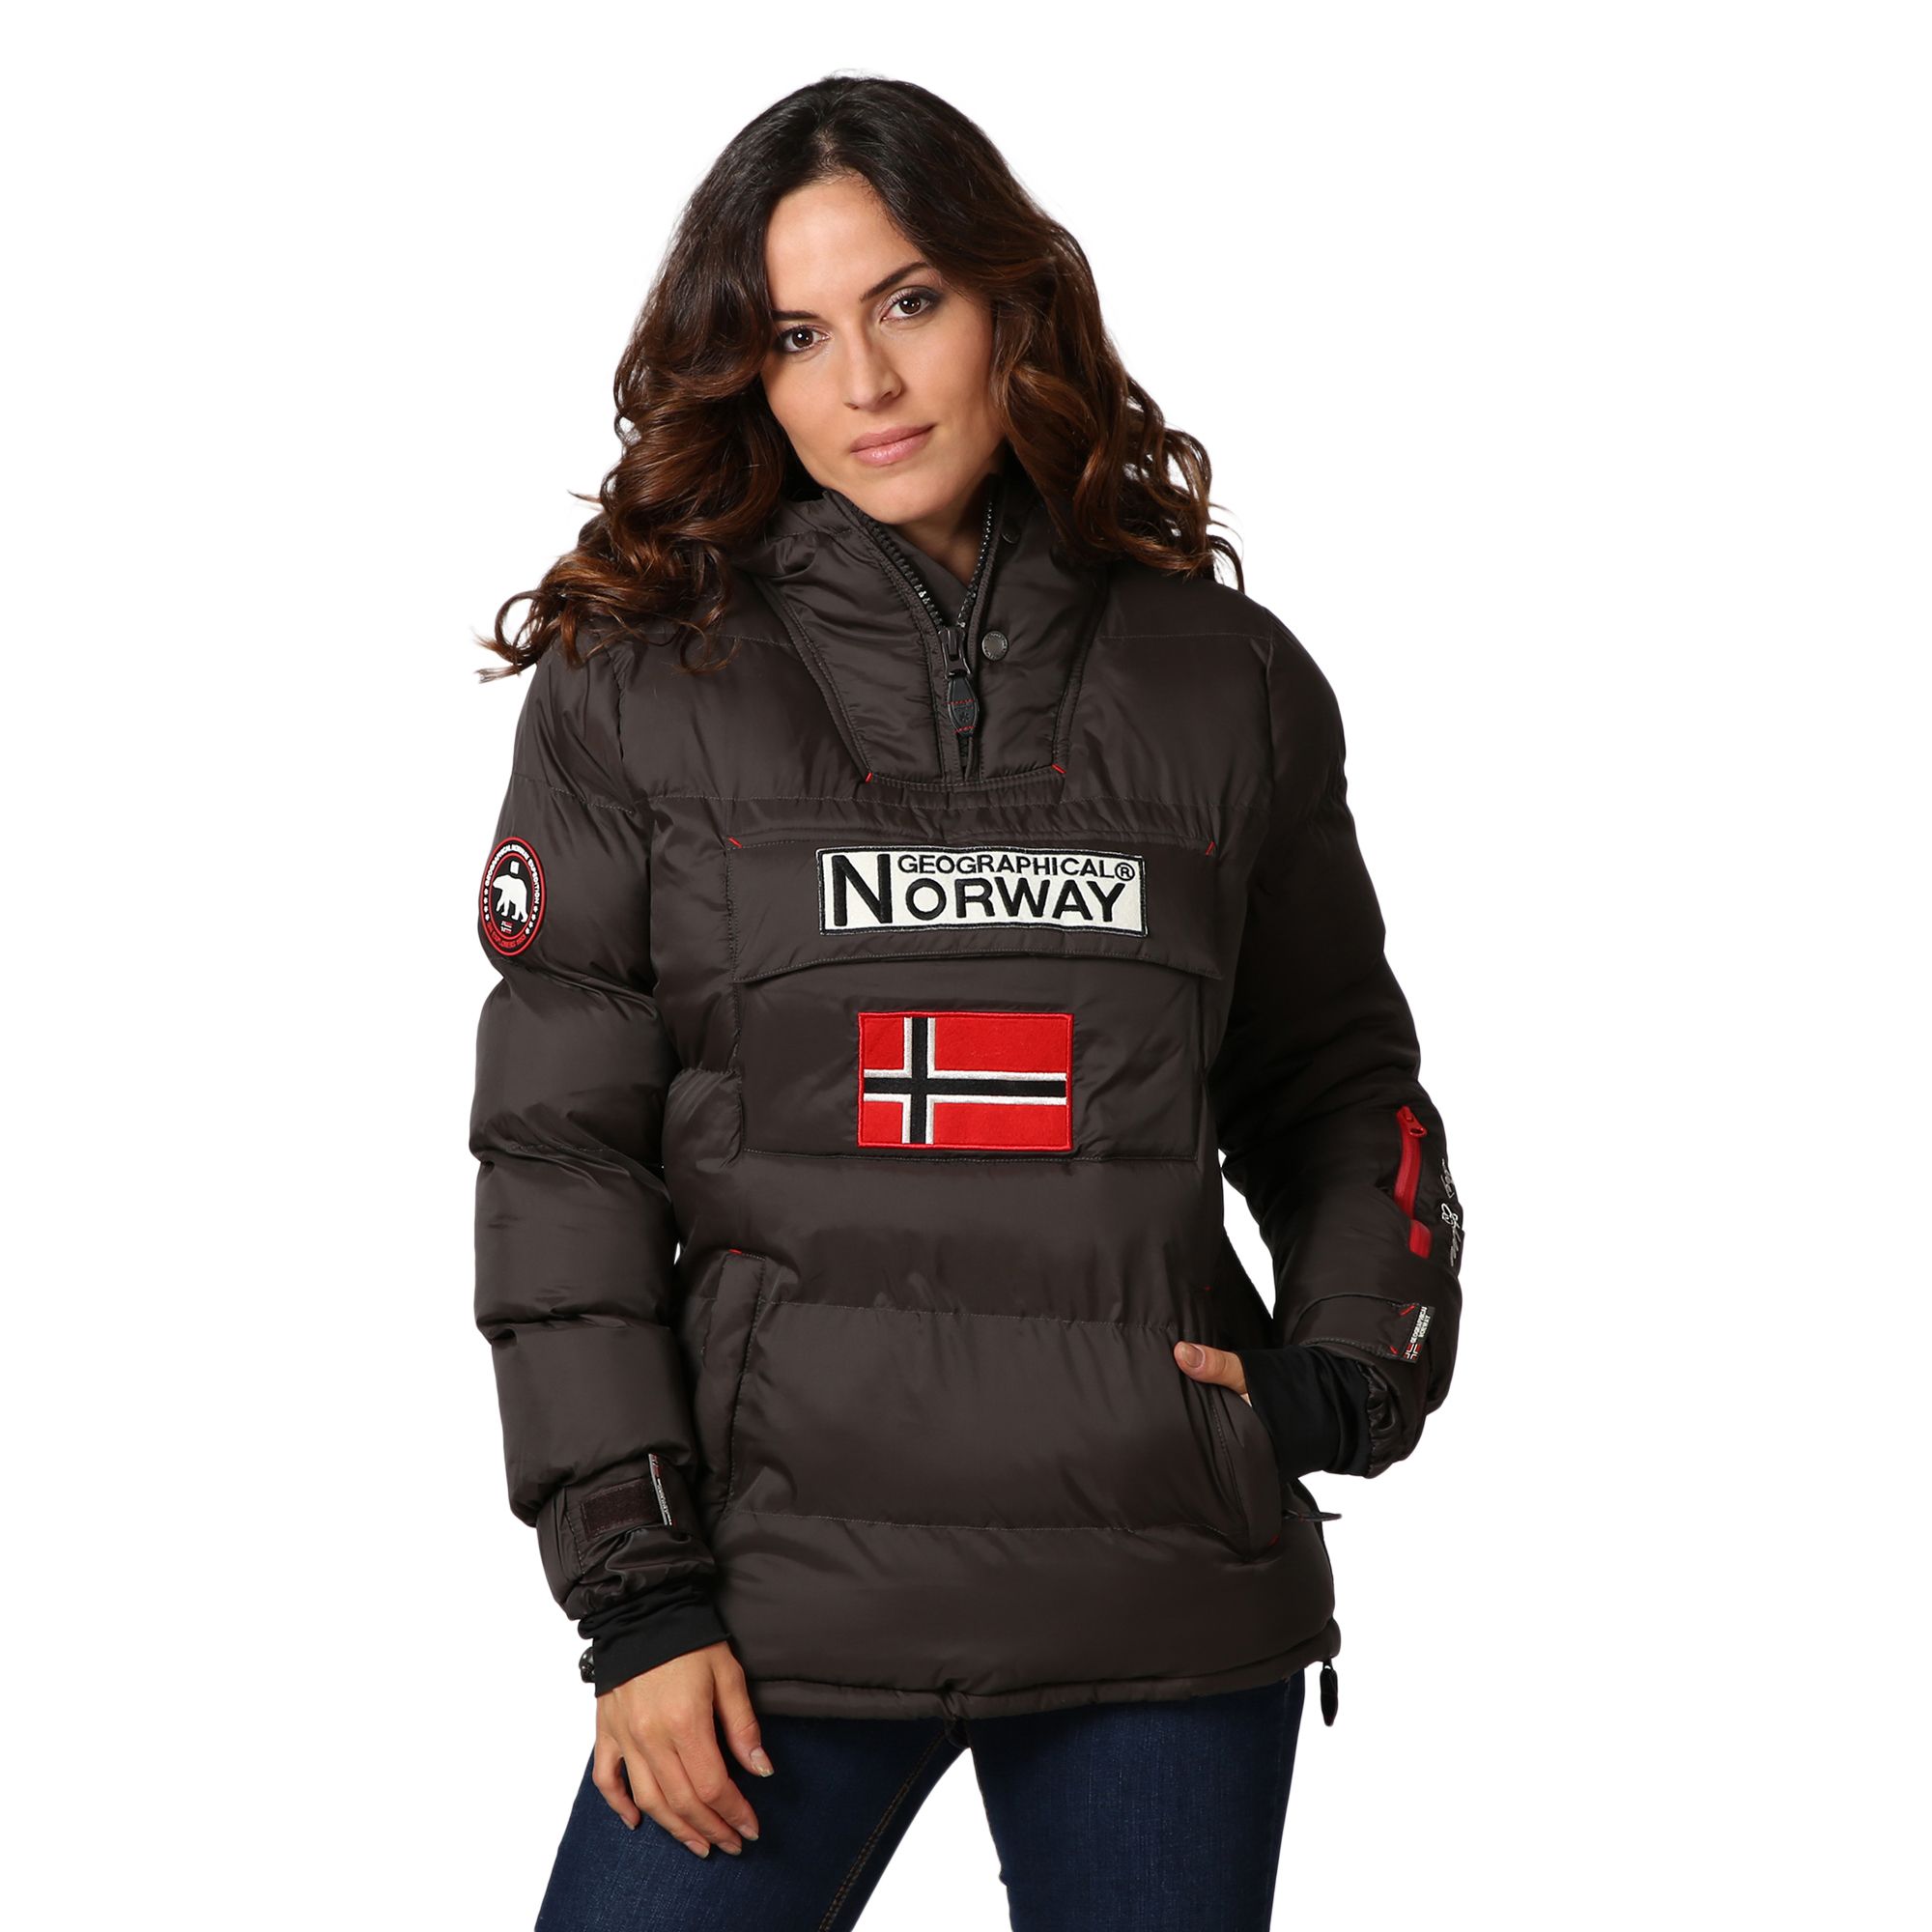 Privalia parte de al Twitter: "¡Las chaquetas Geographical Norway son son tendencia este invierno! Podéis encontrar la vuestra en ▷ https://t.co/8cHFtOqmC9 https://t.co/do9BgNAqBi" /